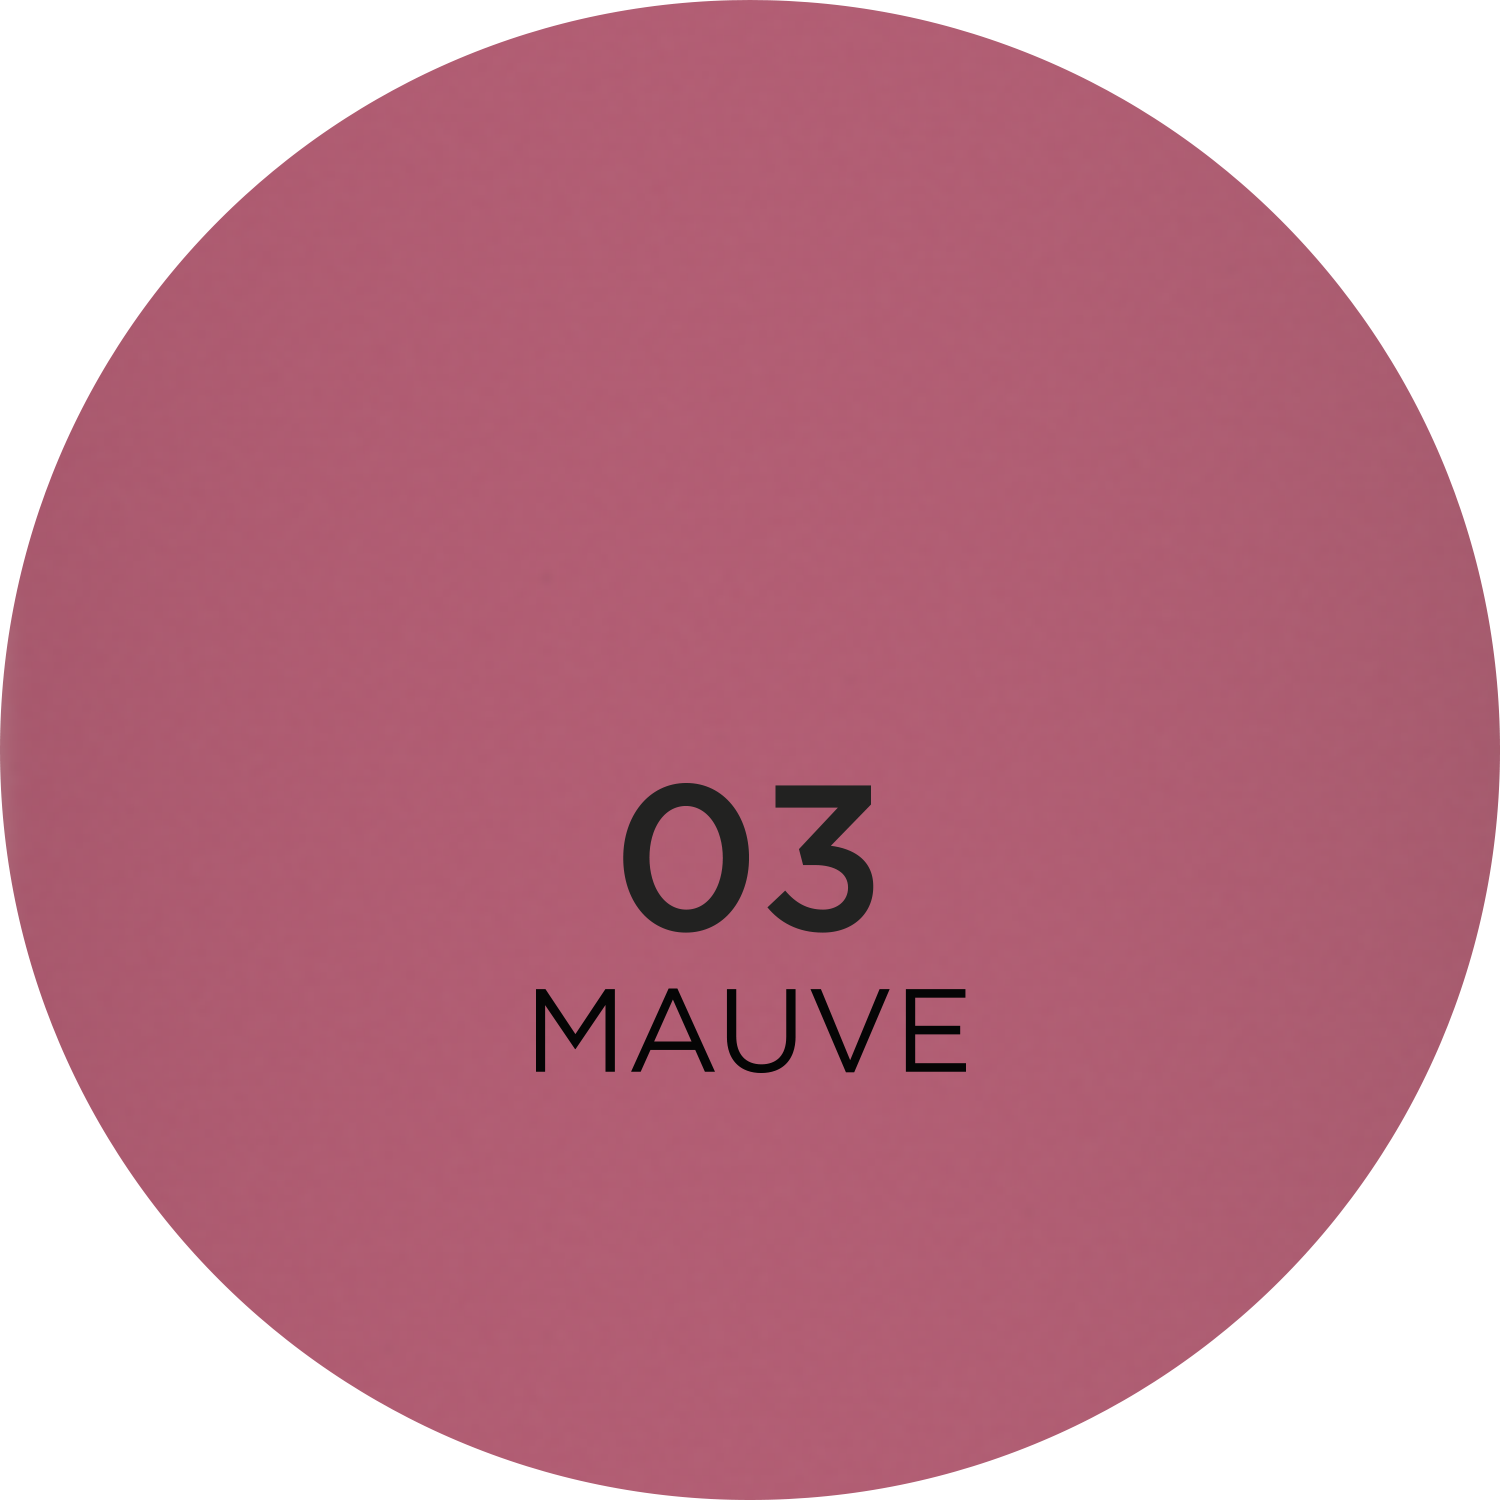 03 Mauve